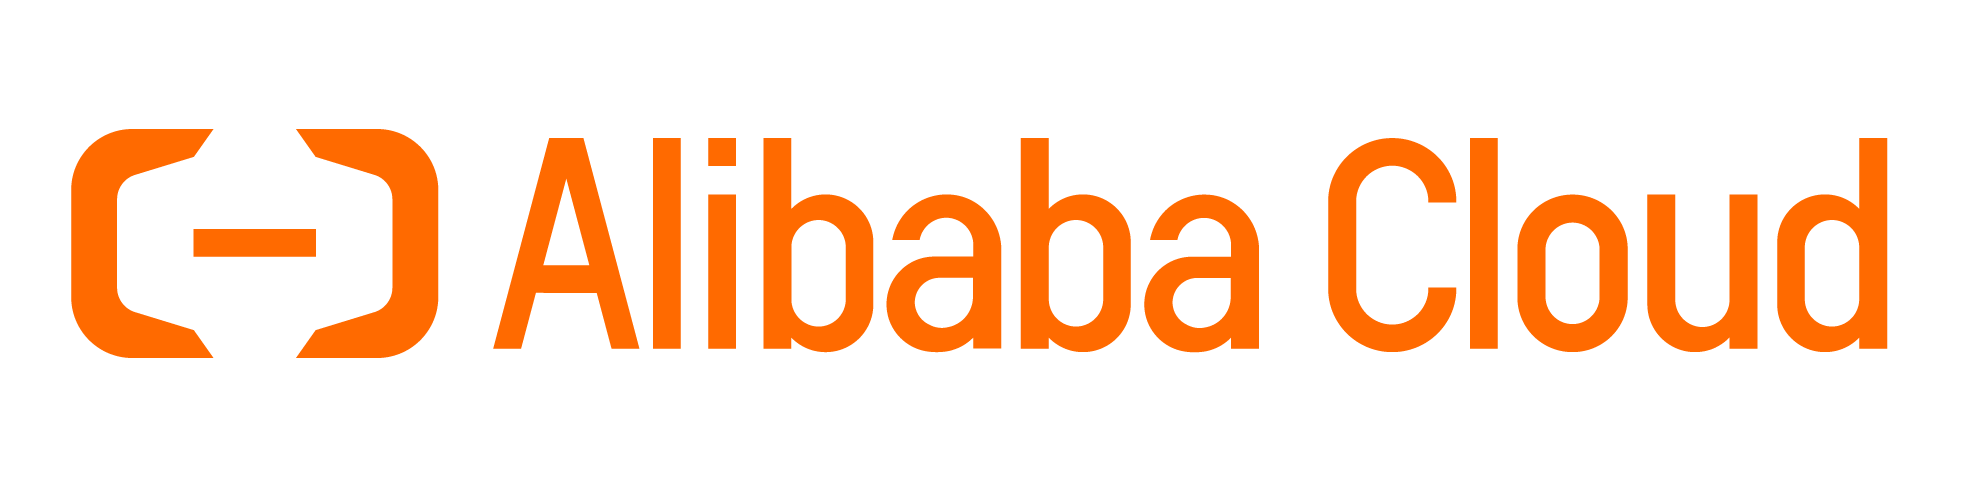 alibaba_cloud_1